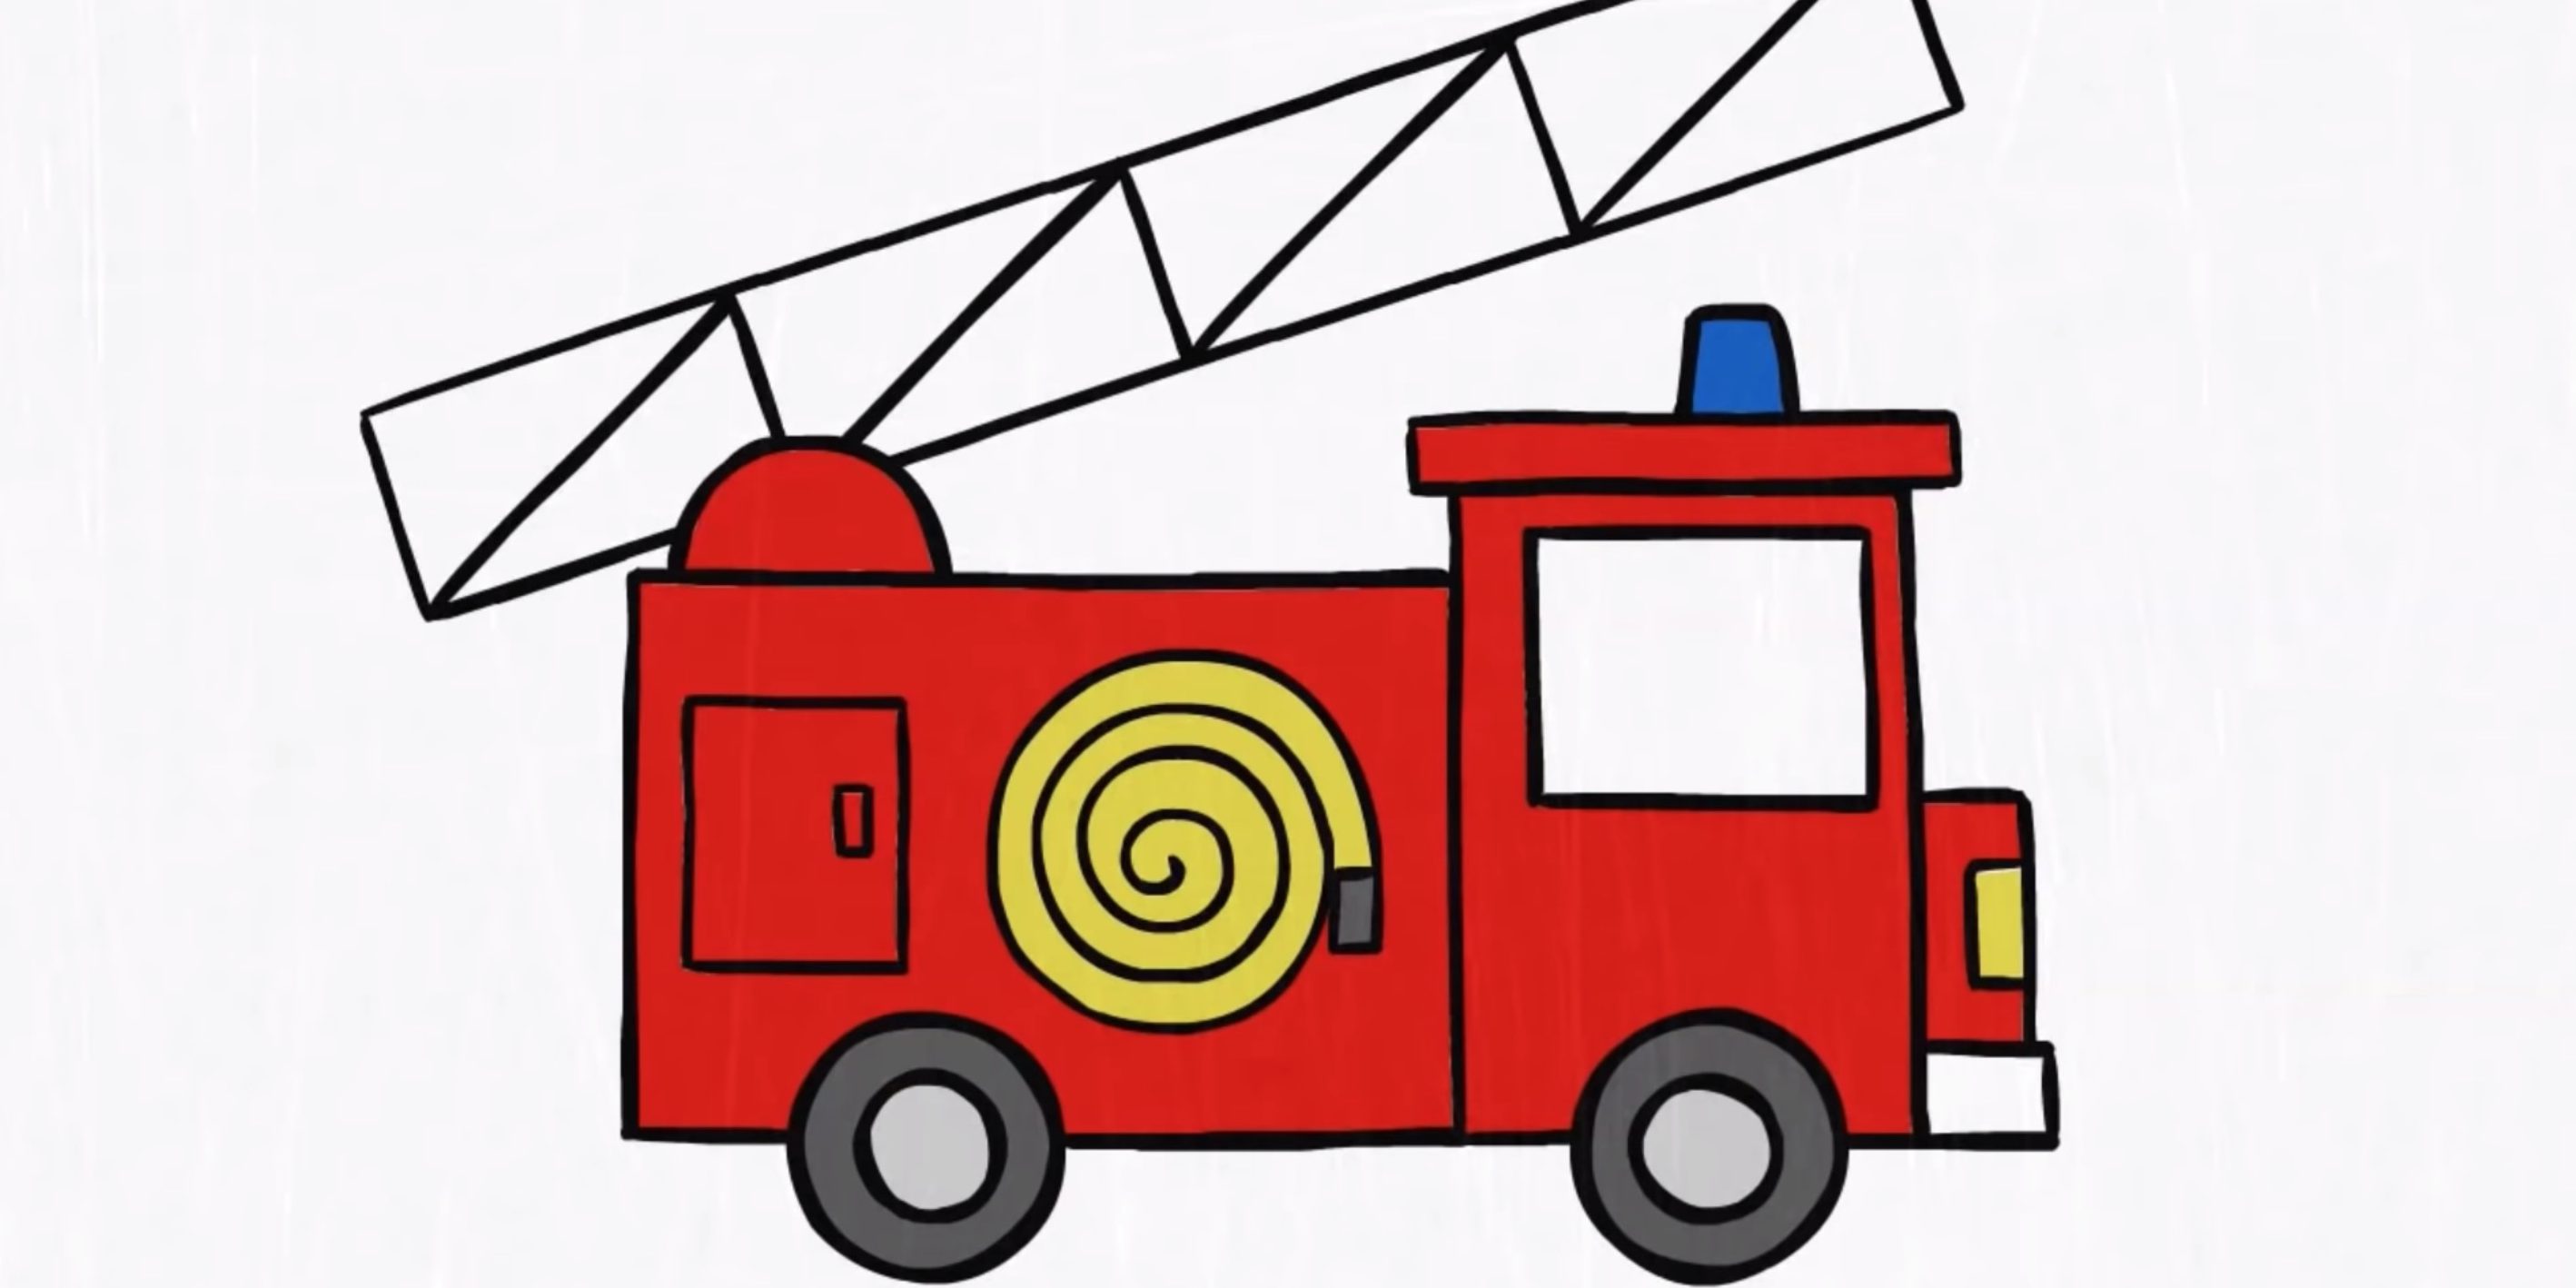 Пожарная машина поэтапно. Кануки Капуки пожарная машина. Капуки Кануки пожарная машина рисовашка. Пожарная машина рисунок. Рисование для детей пожарная машина.